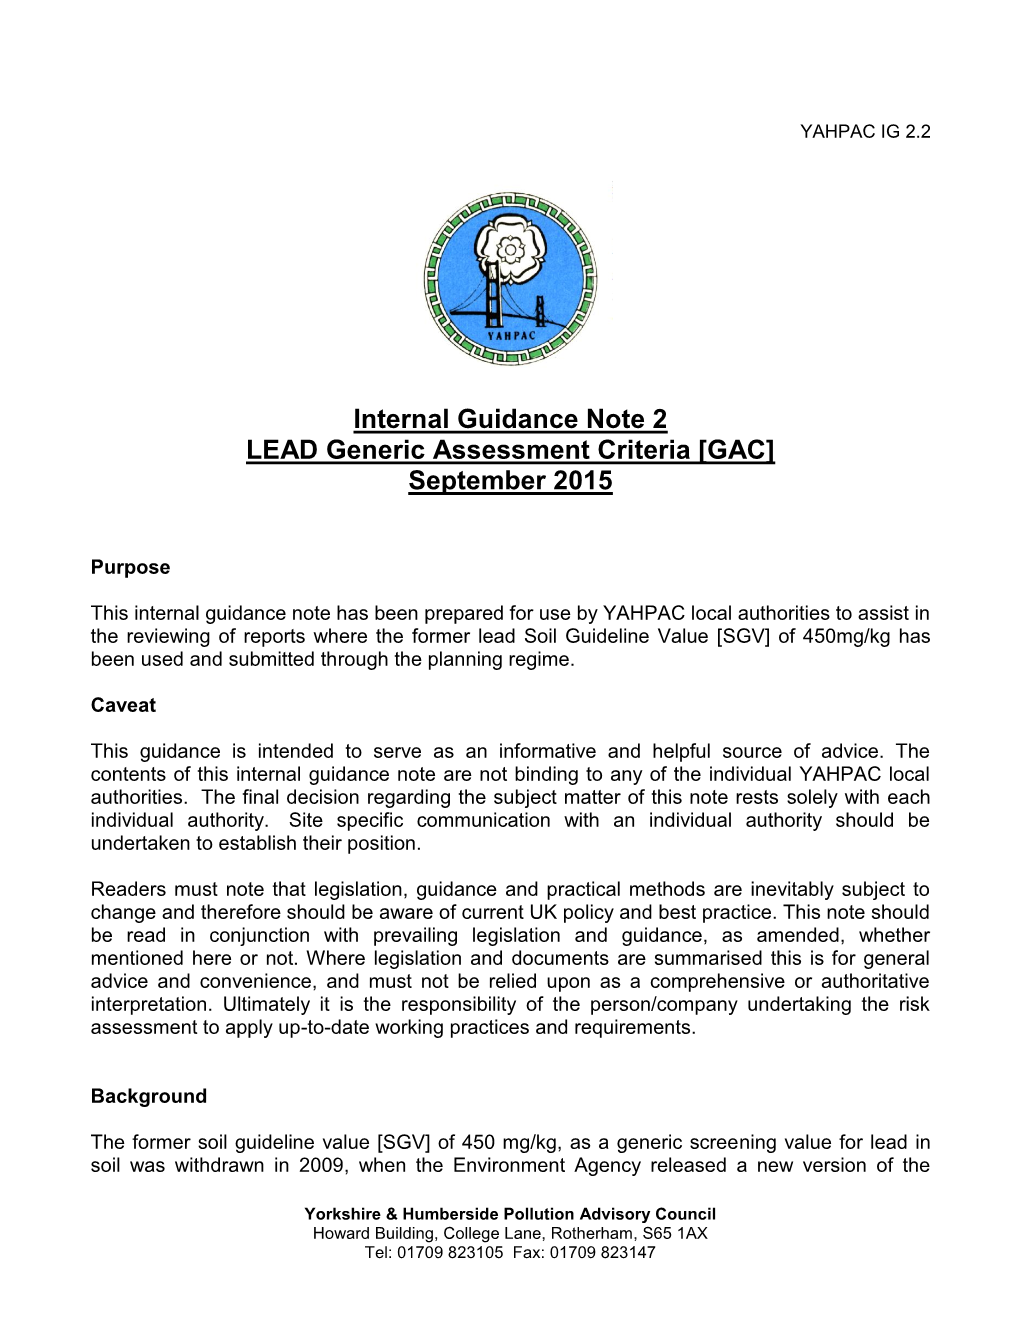 Internal Guidance Note 2 LEAD Generic Assessment Criteria [GAC] September 2015